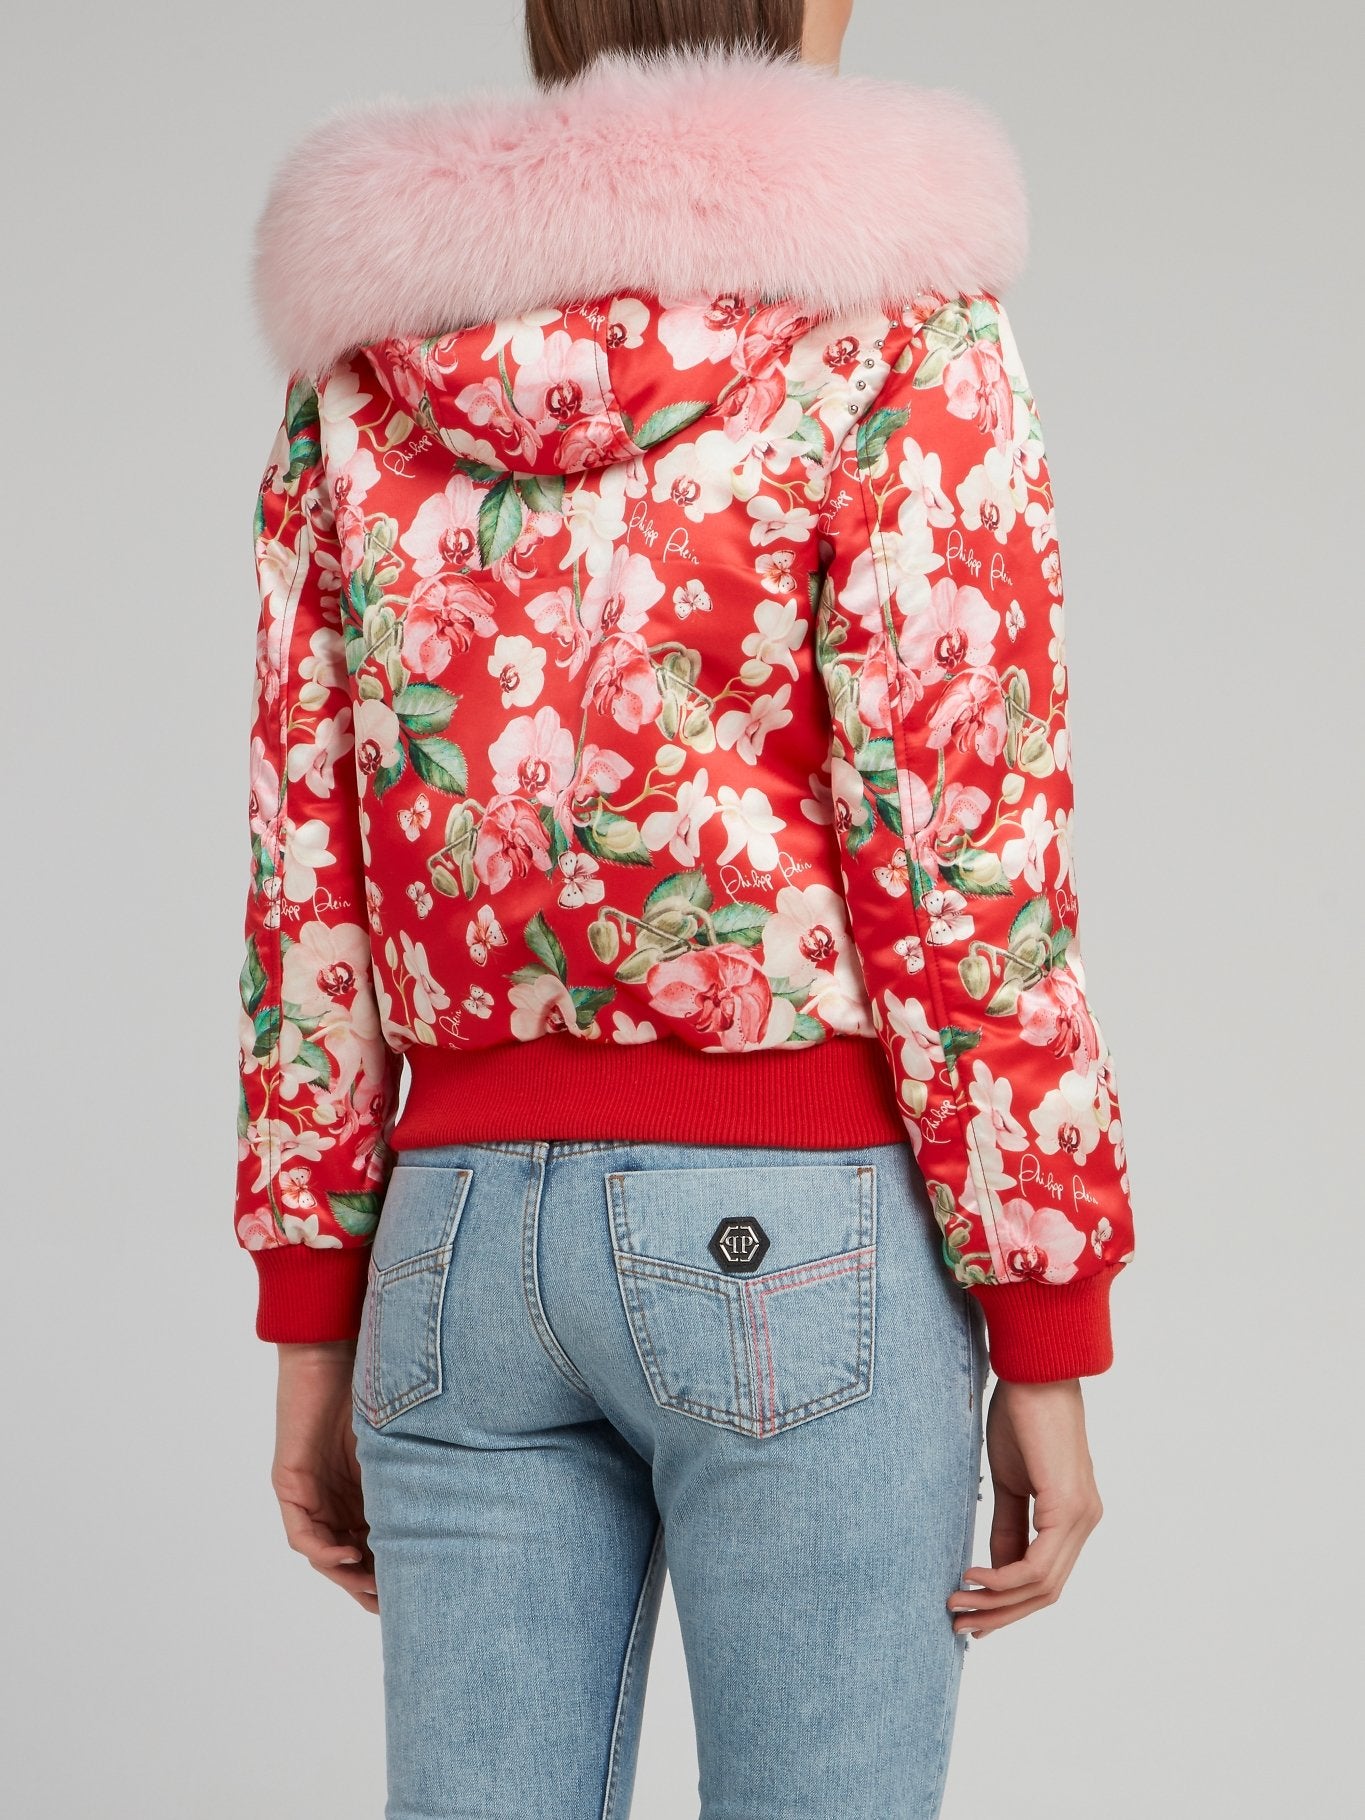 Red Floral Print Fur Collar Bomber Jacket